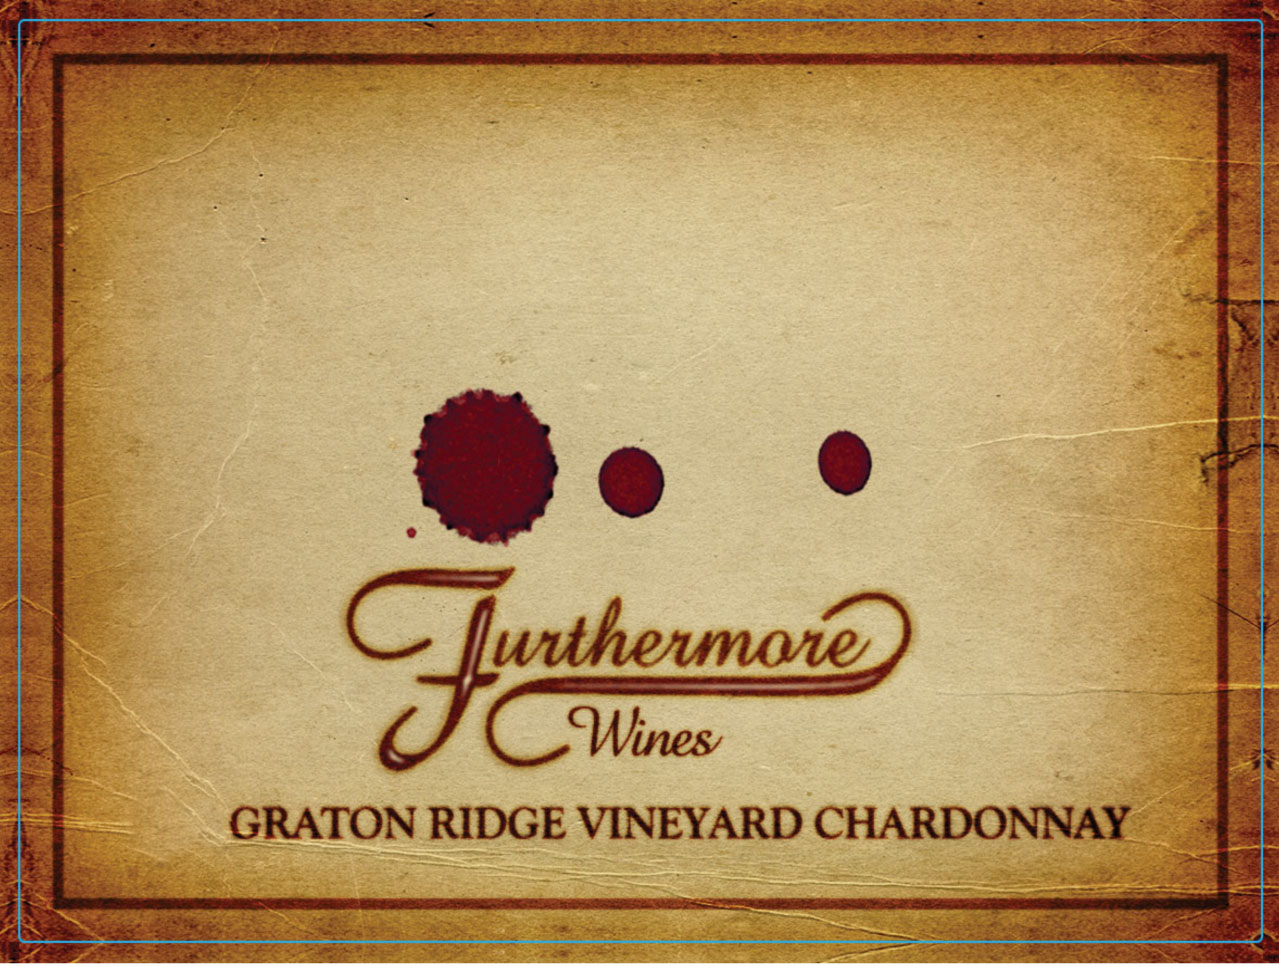 Furthermore - Chardonnay - Graton Ridge RRV label